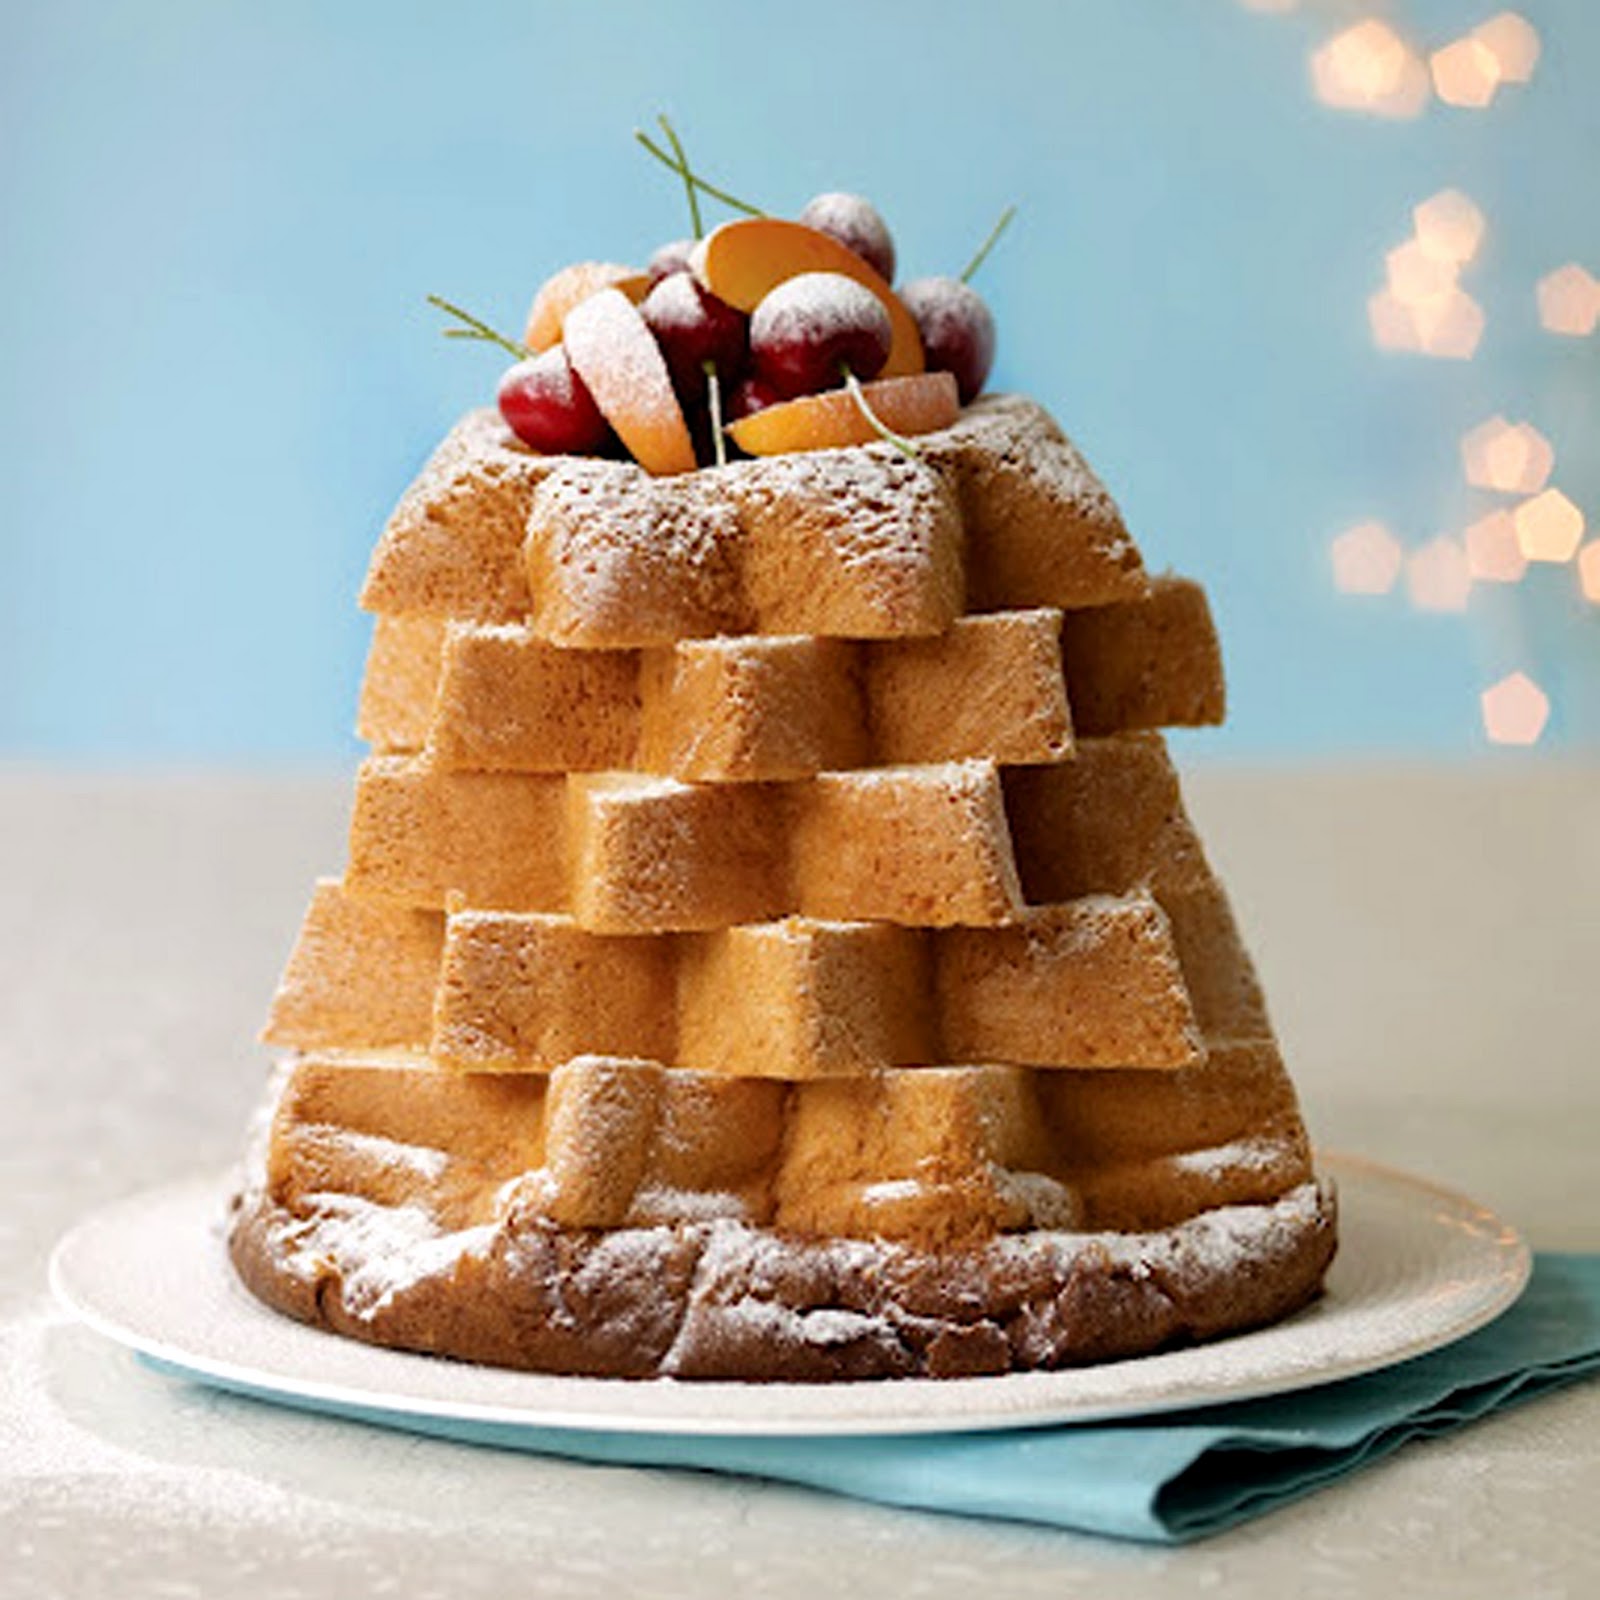 Pandoro Christmas Tree Cake with Amaretto and Mascarpone Whipped